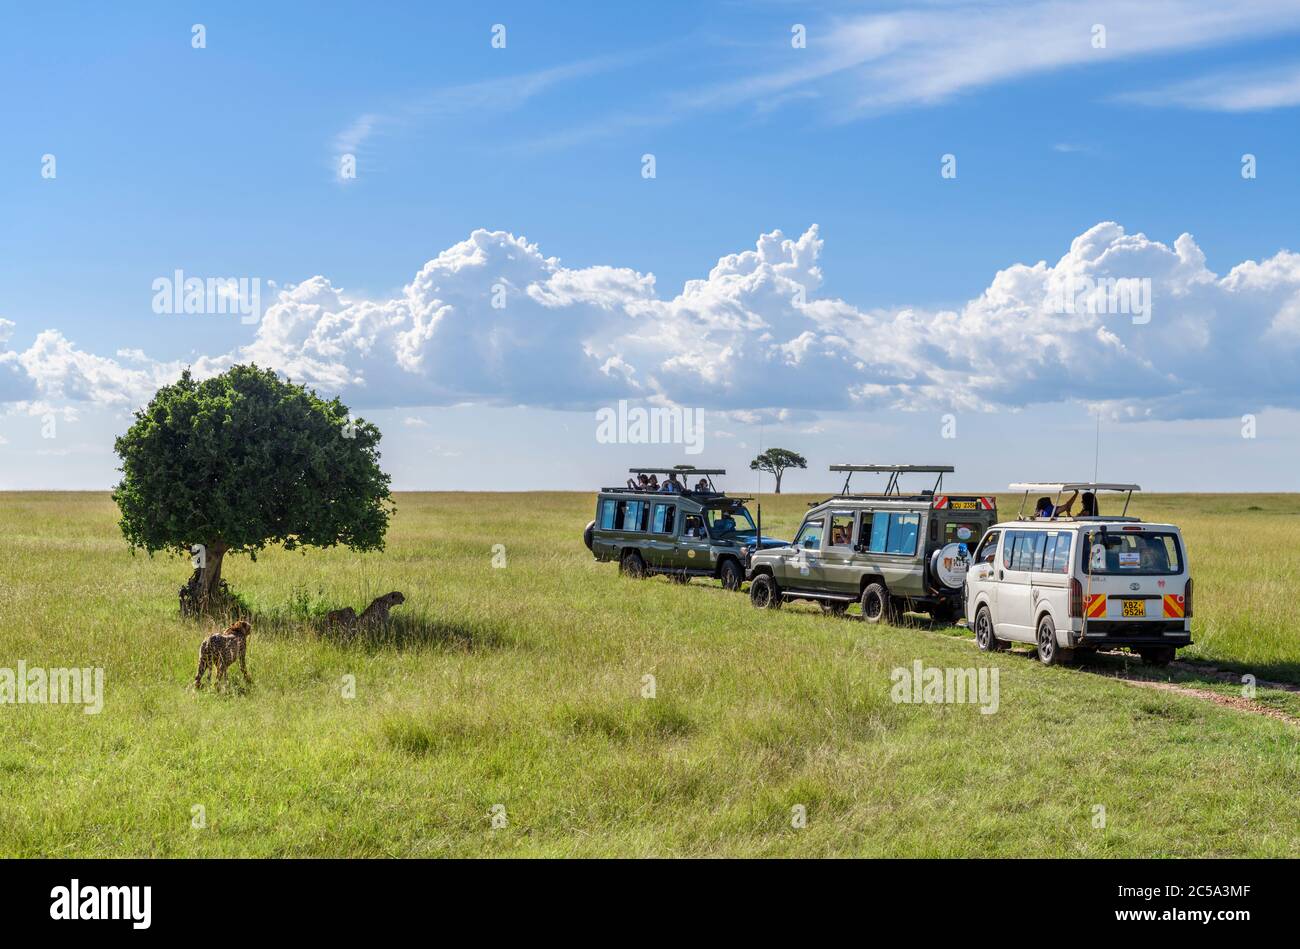 Cheetah (Acinonyx jubatus). Tourists in safari vehicles on a game drive taking photos of cheetahs, Masai Mara National Reserve, Kenya, Africa Stock Photo